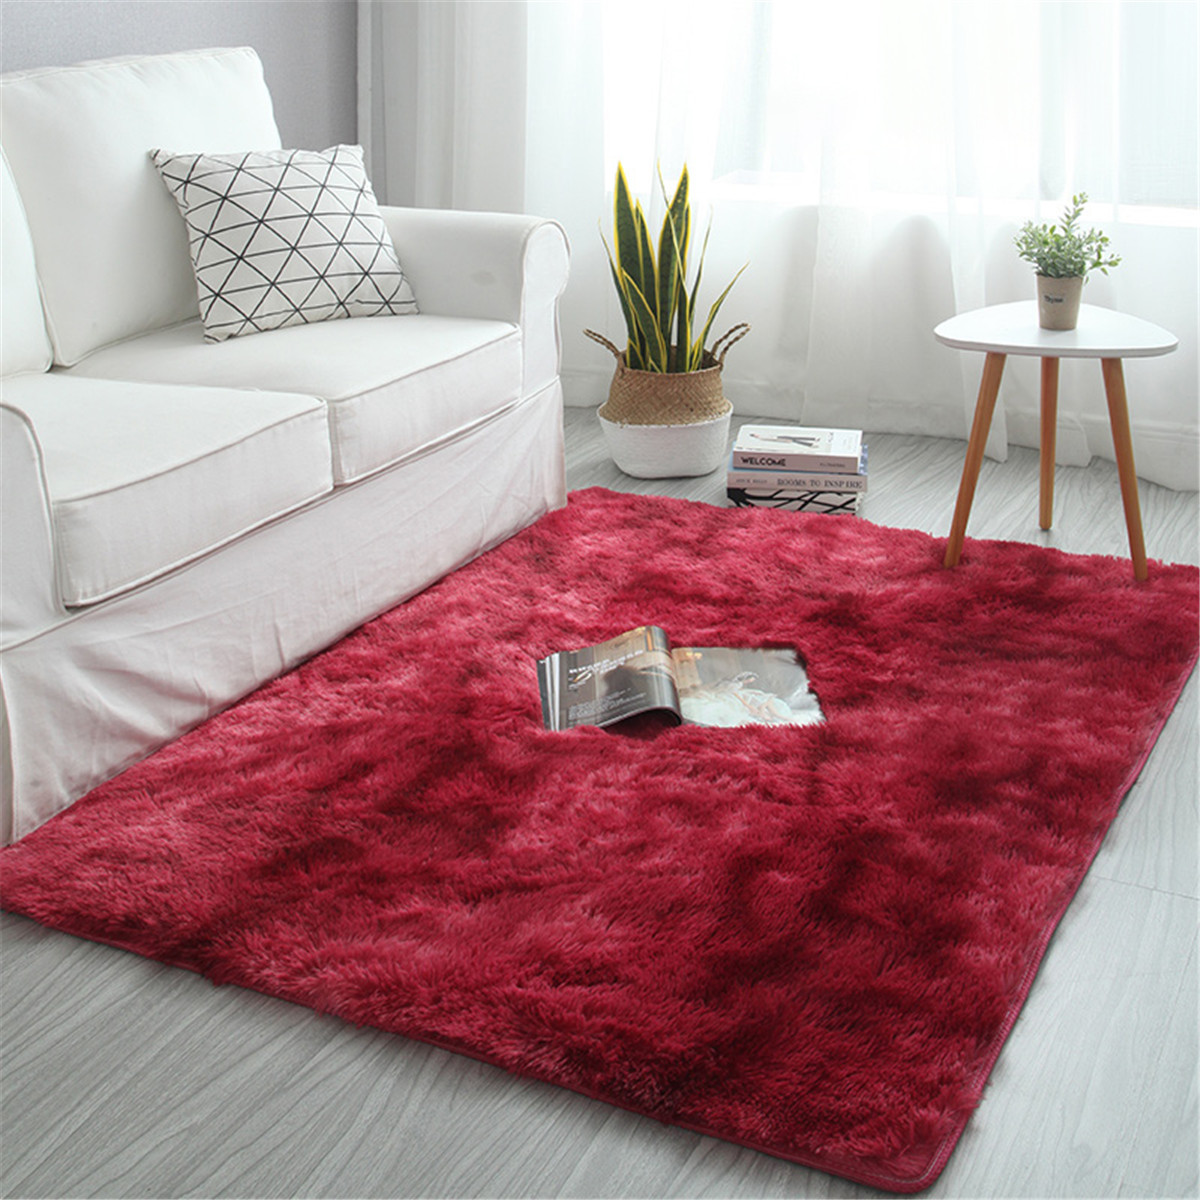 150X240CM-Tie-dyed-Gradient-Carpet-Long-Haired-Anti-slip-Carpet-For-Bedroom-Living-Room-Study-Room-1919744-10